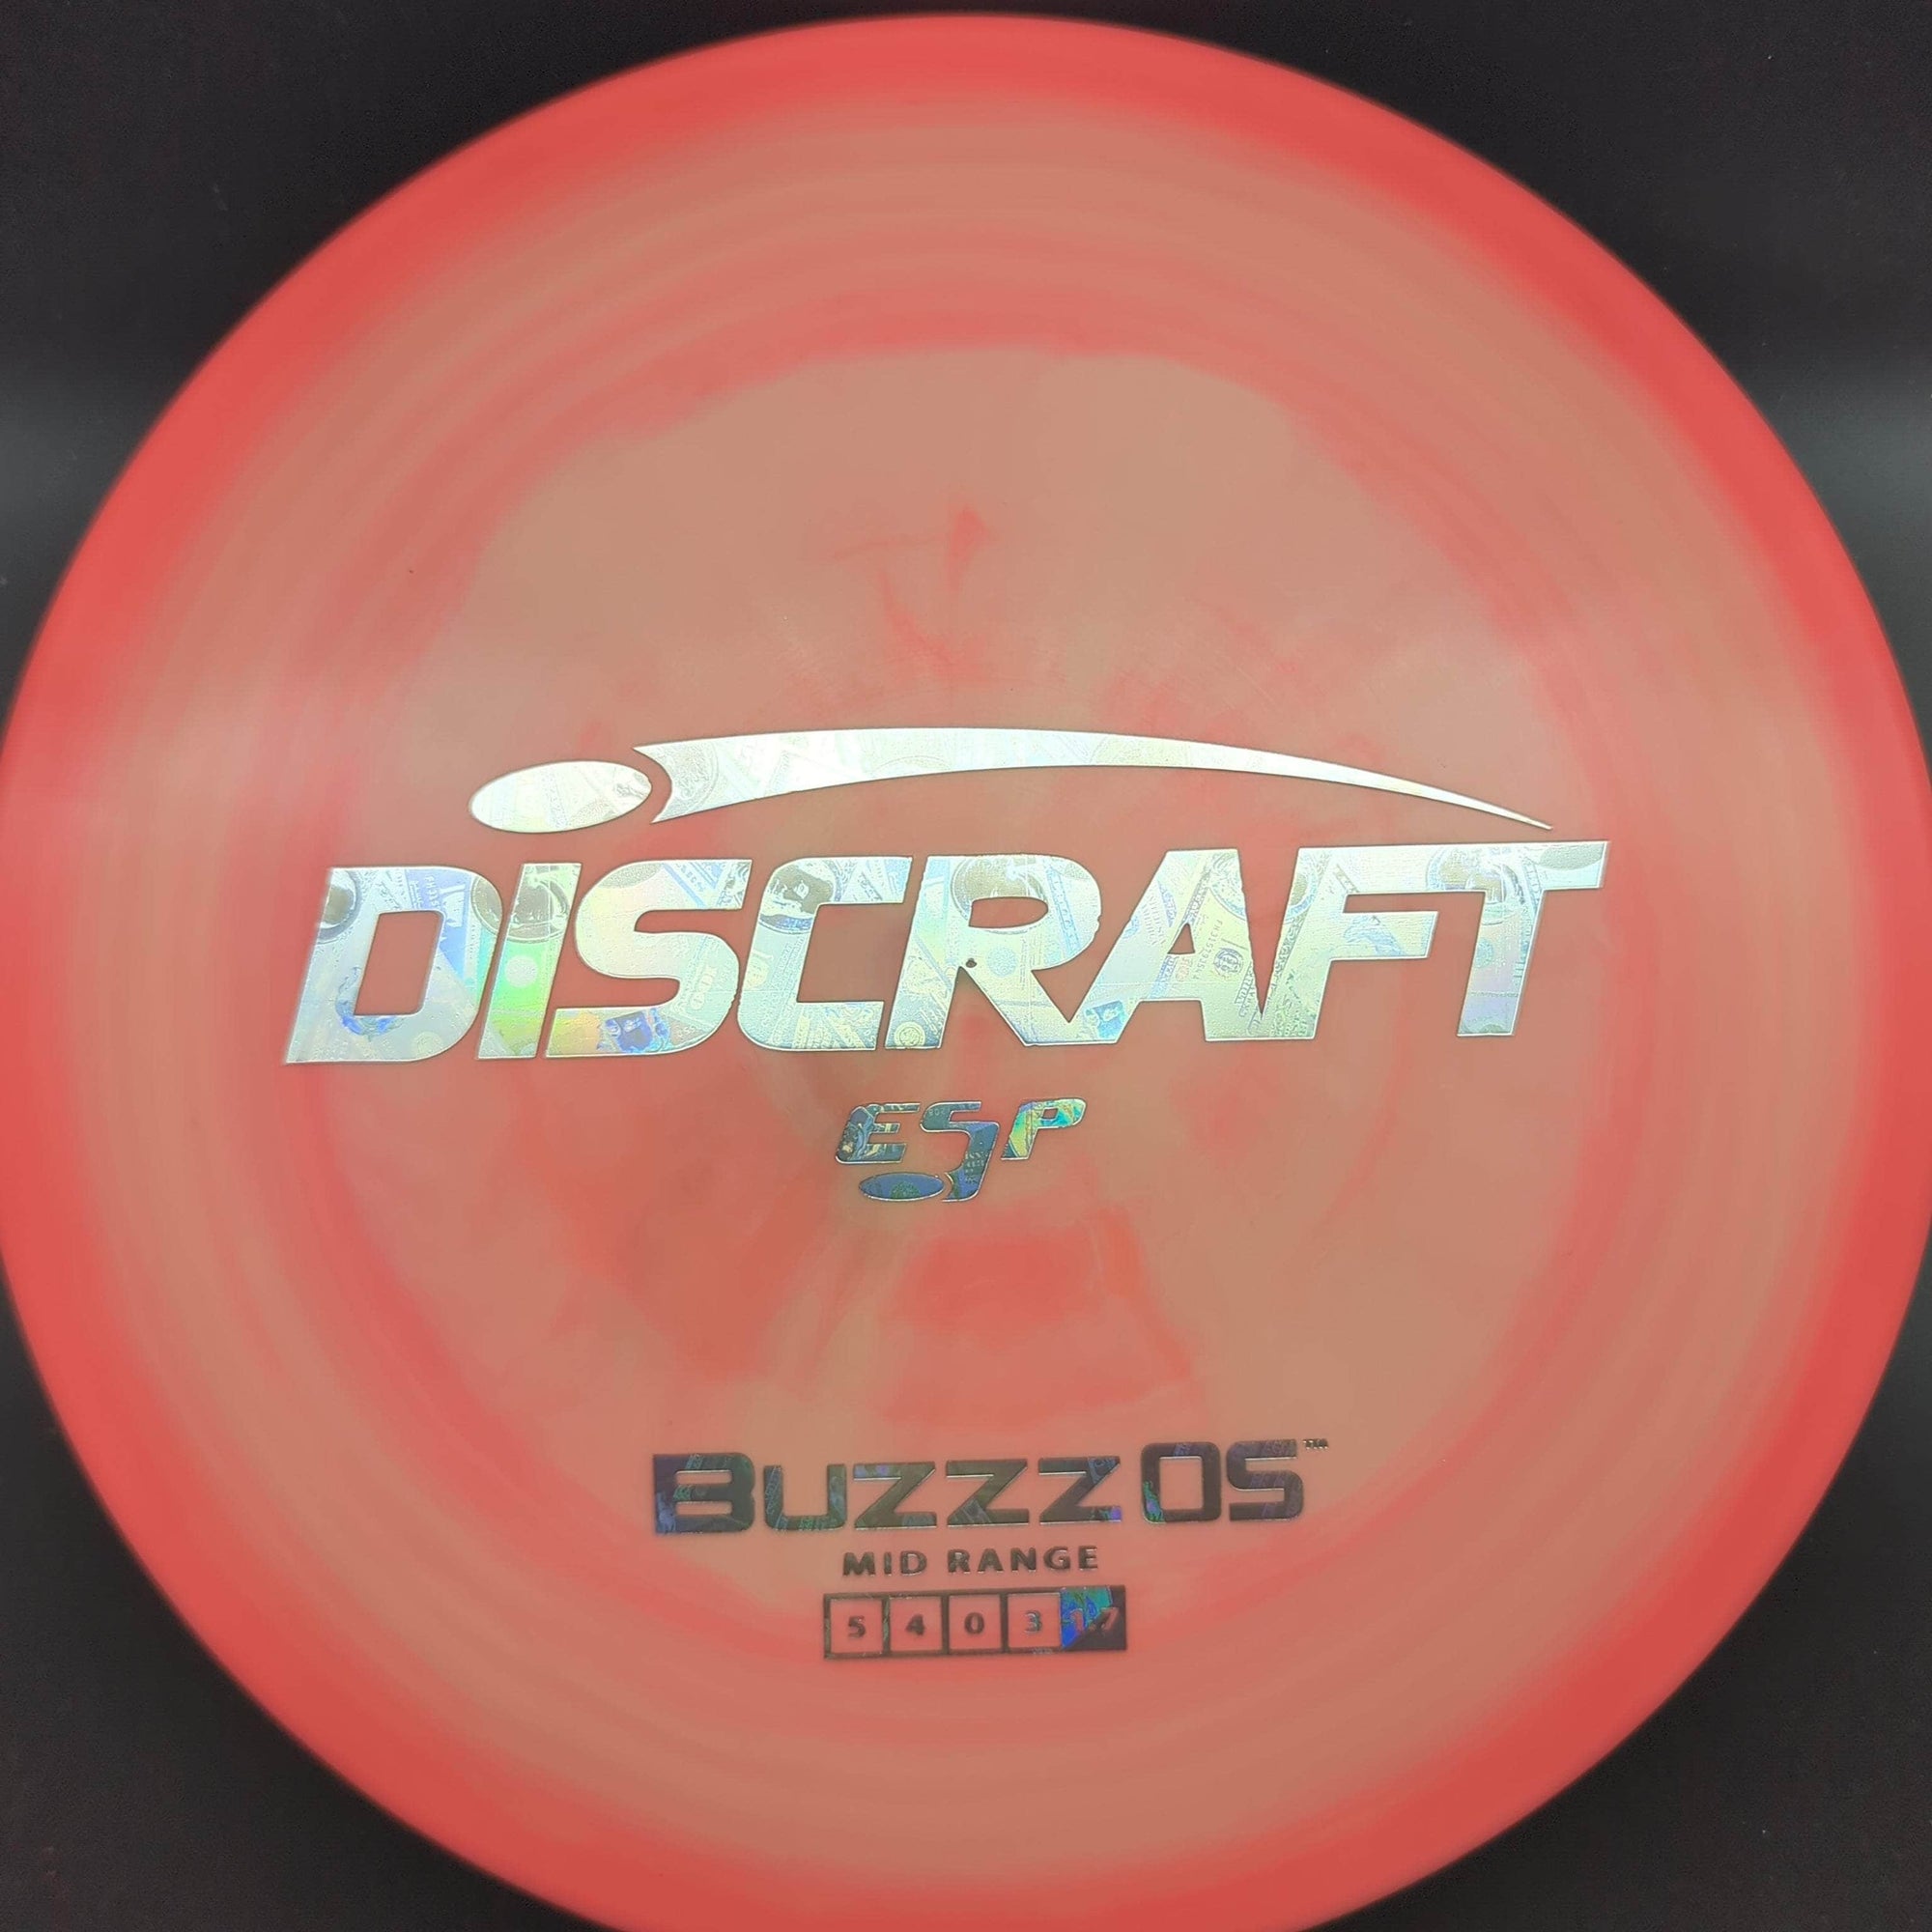 Discraft Mid Range Buzzz OS, ESP